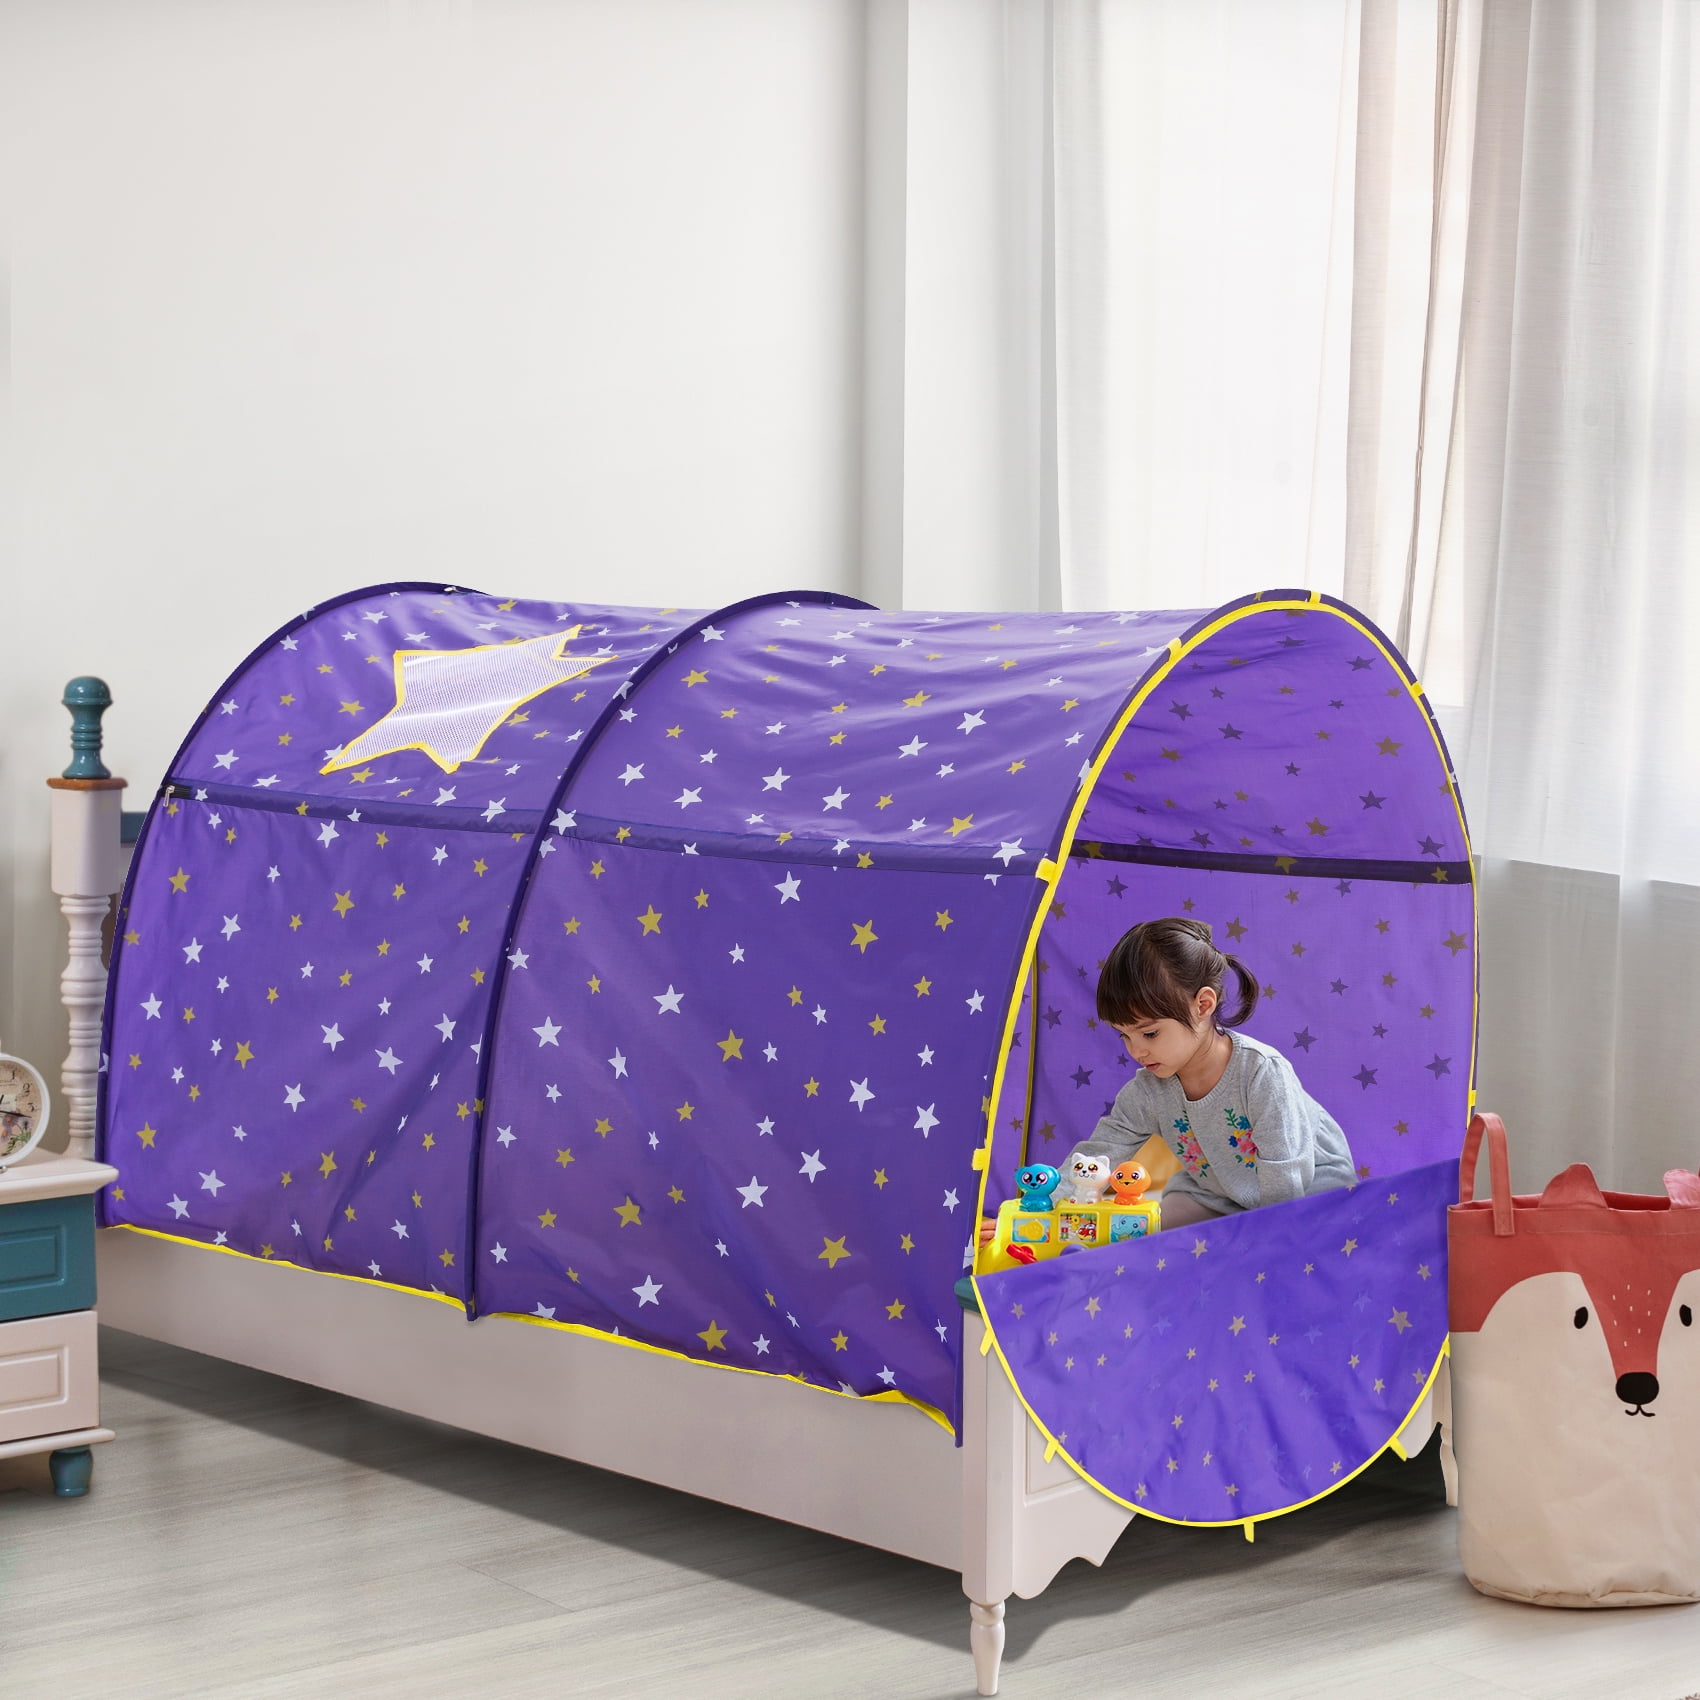 Dream Tent Fancy Galaxy Adventure Wonderland Foldable Pop Up Indoor Bed Kid Gift 